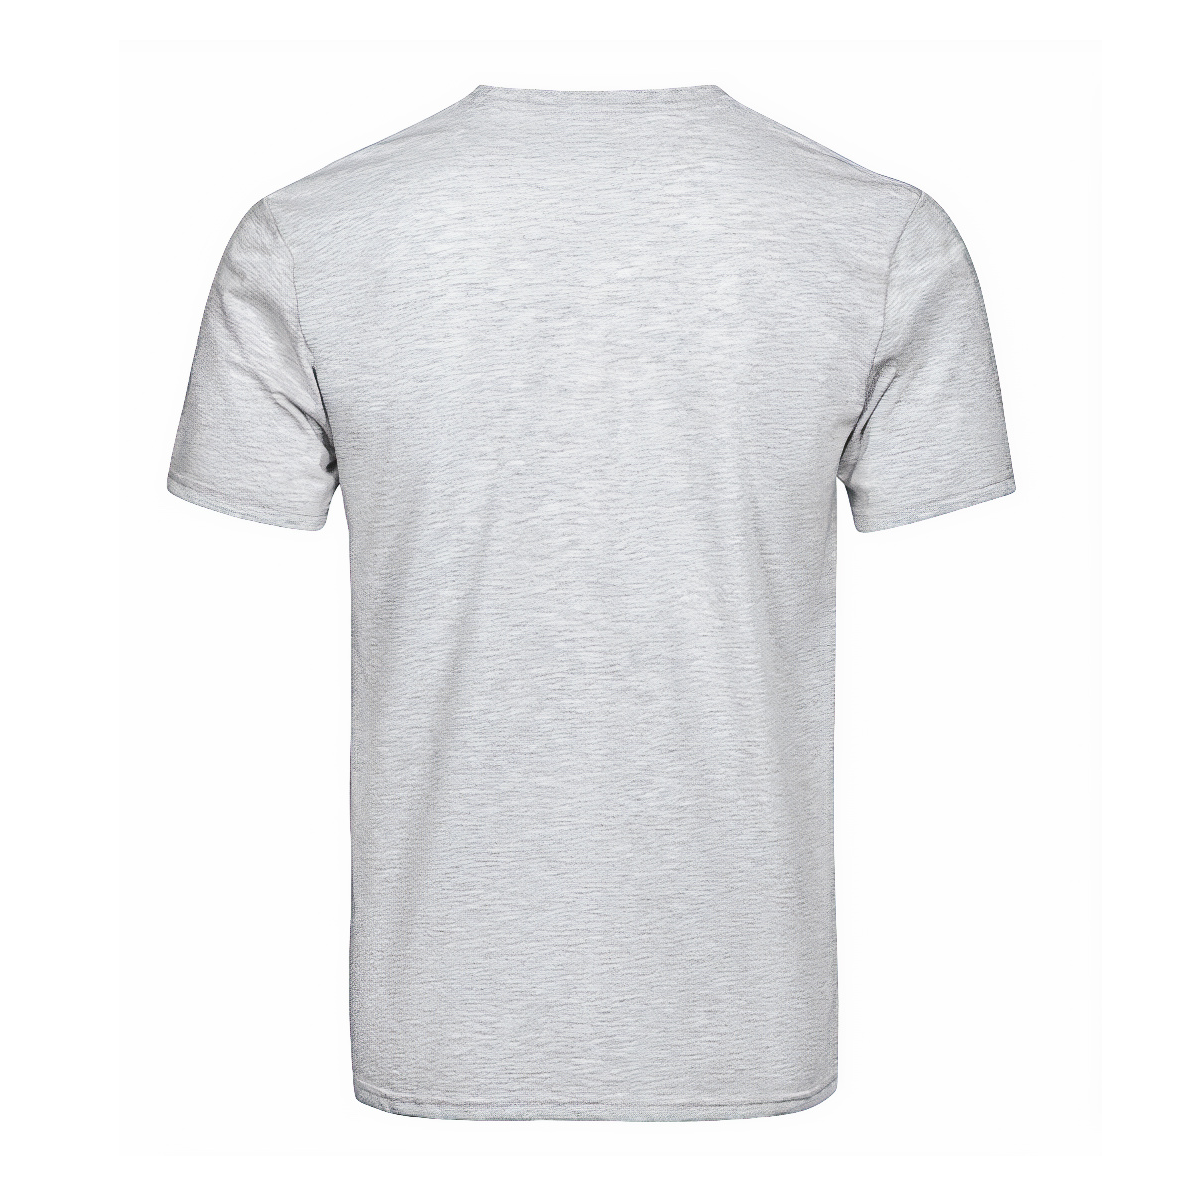 MacIntyre Tartan Crest T-shirt - I'm not yelling style